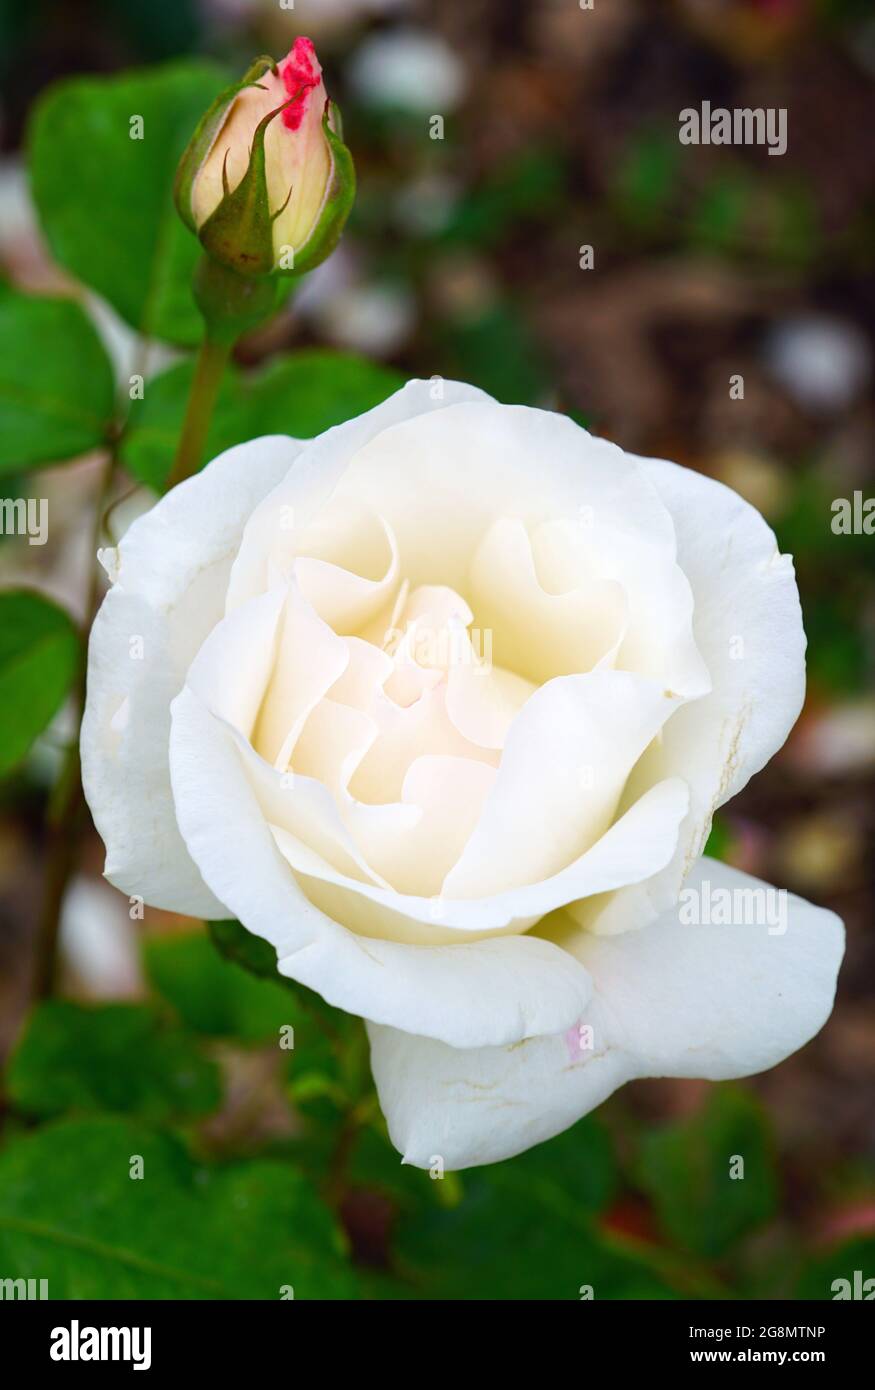 White Queen Elizabeth rose flower growing in the garden Stock Photo - Alamy